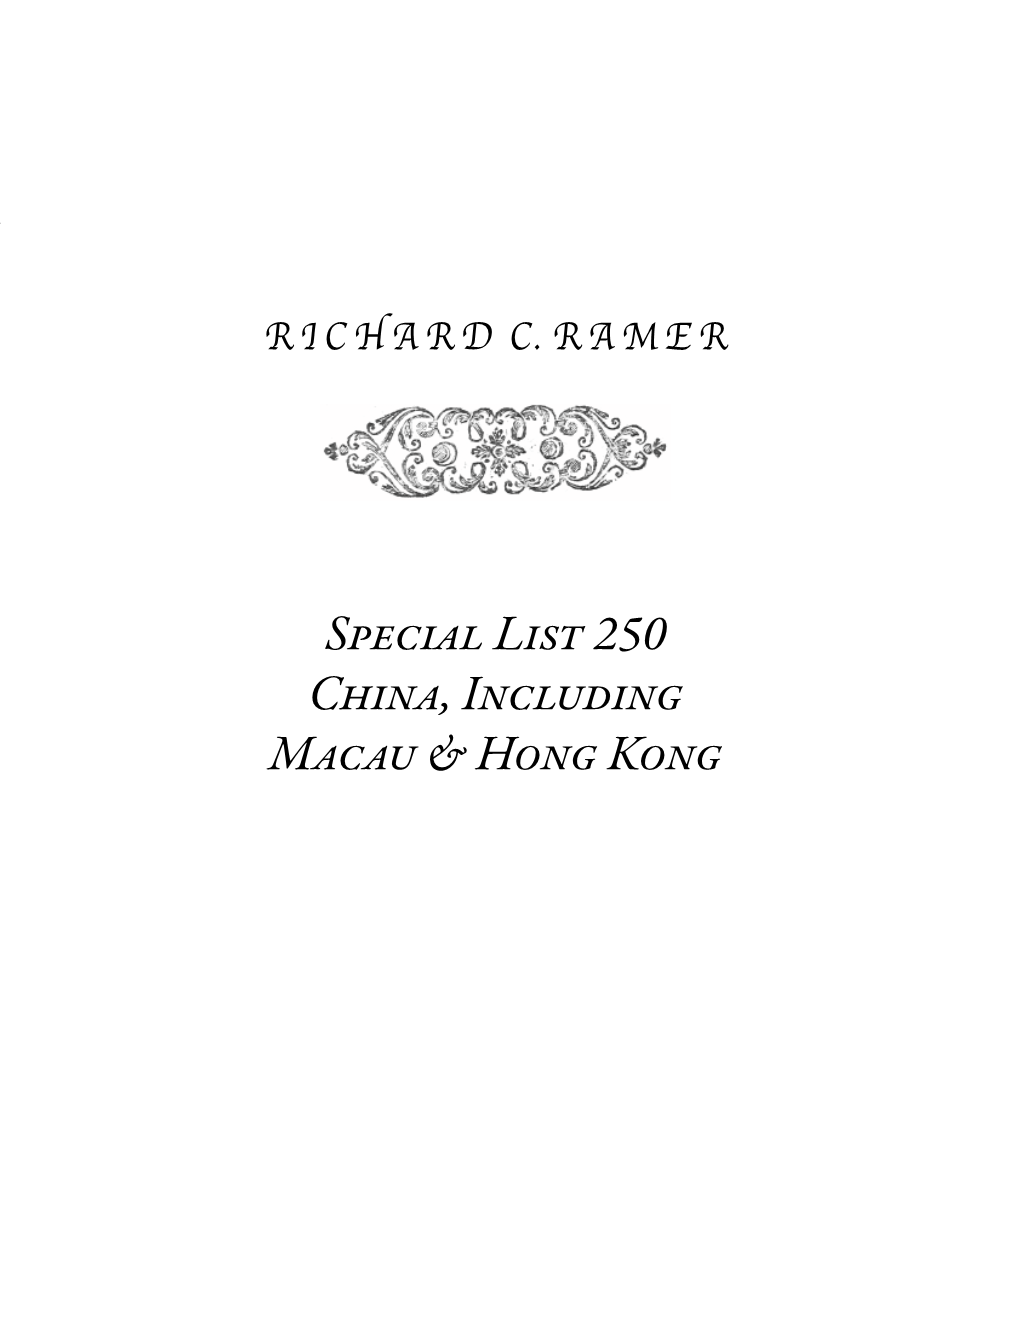 Special List 250 China, Including Macau & Hong Kong